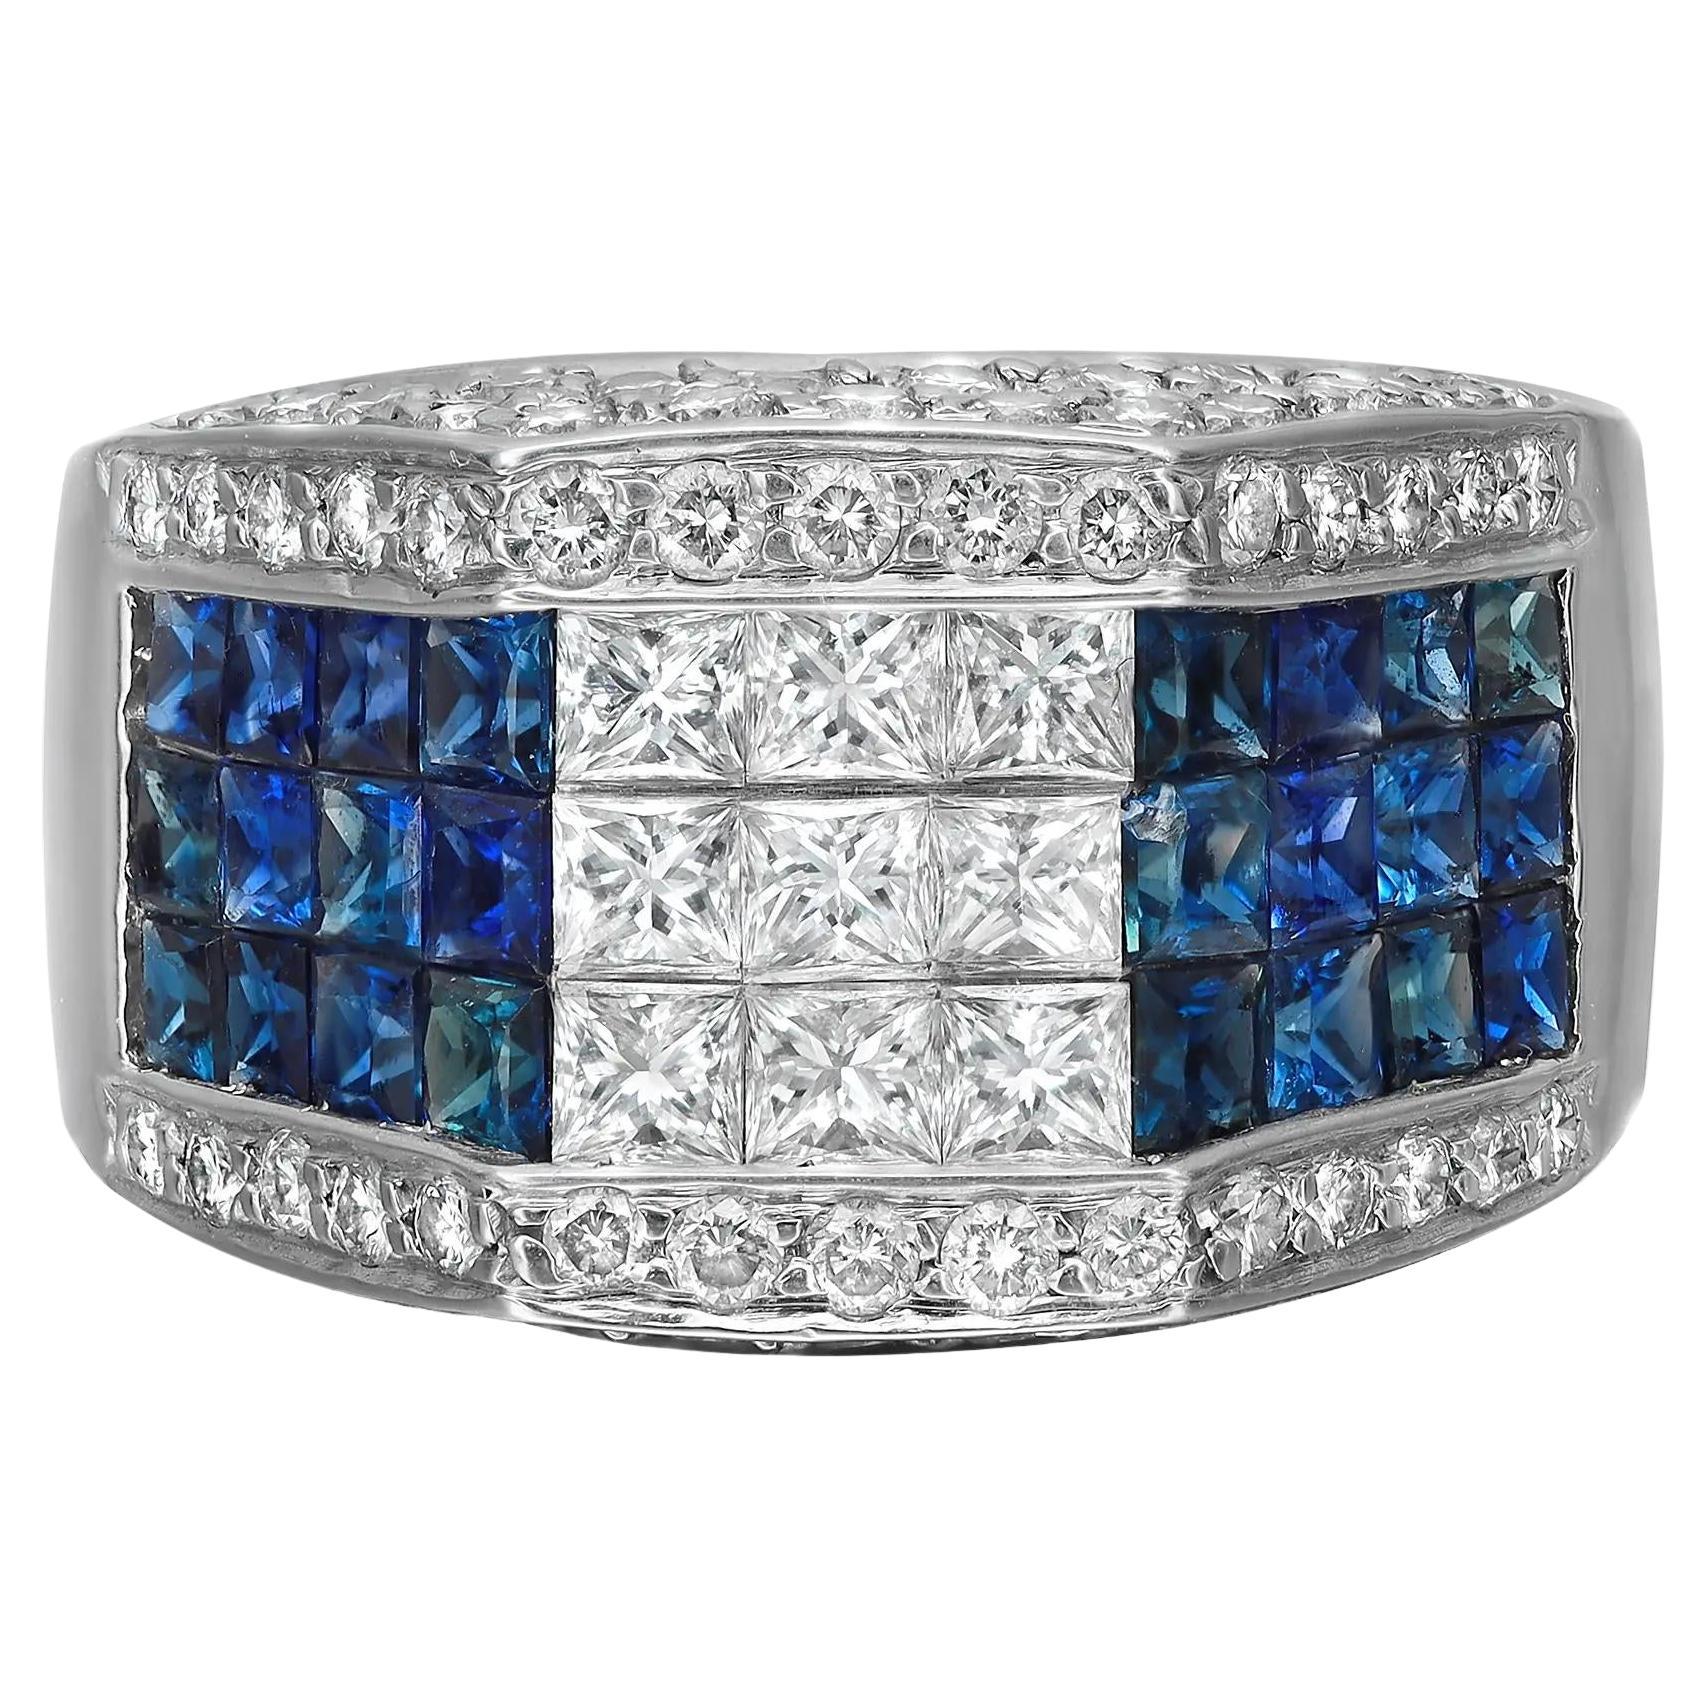 1.09Ctw Diamond & 1.20Ctw Blue Sapphire Cocktail Ring 18K White Gold Size 7